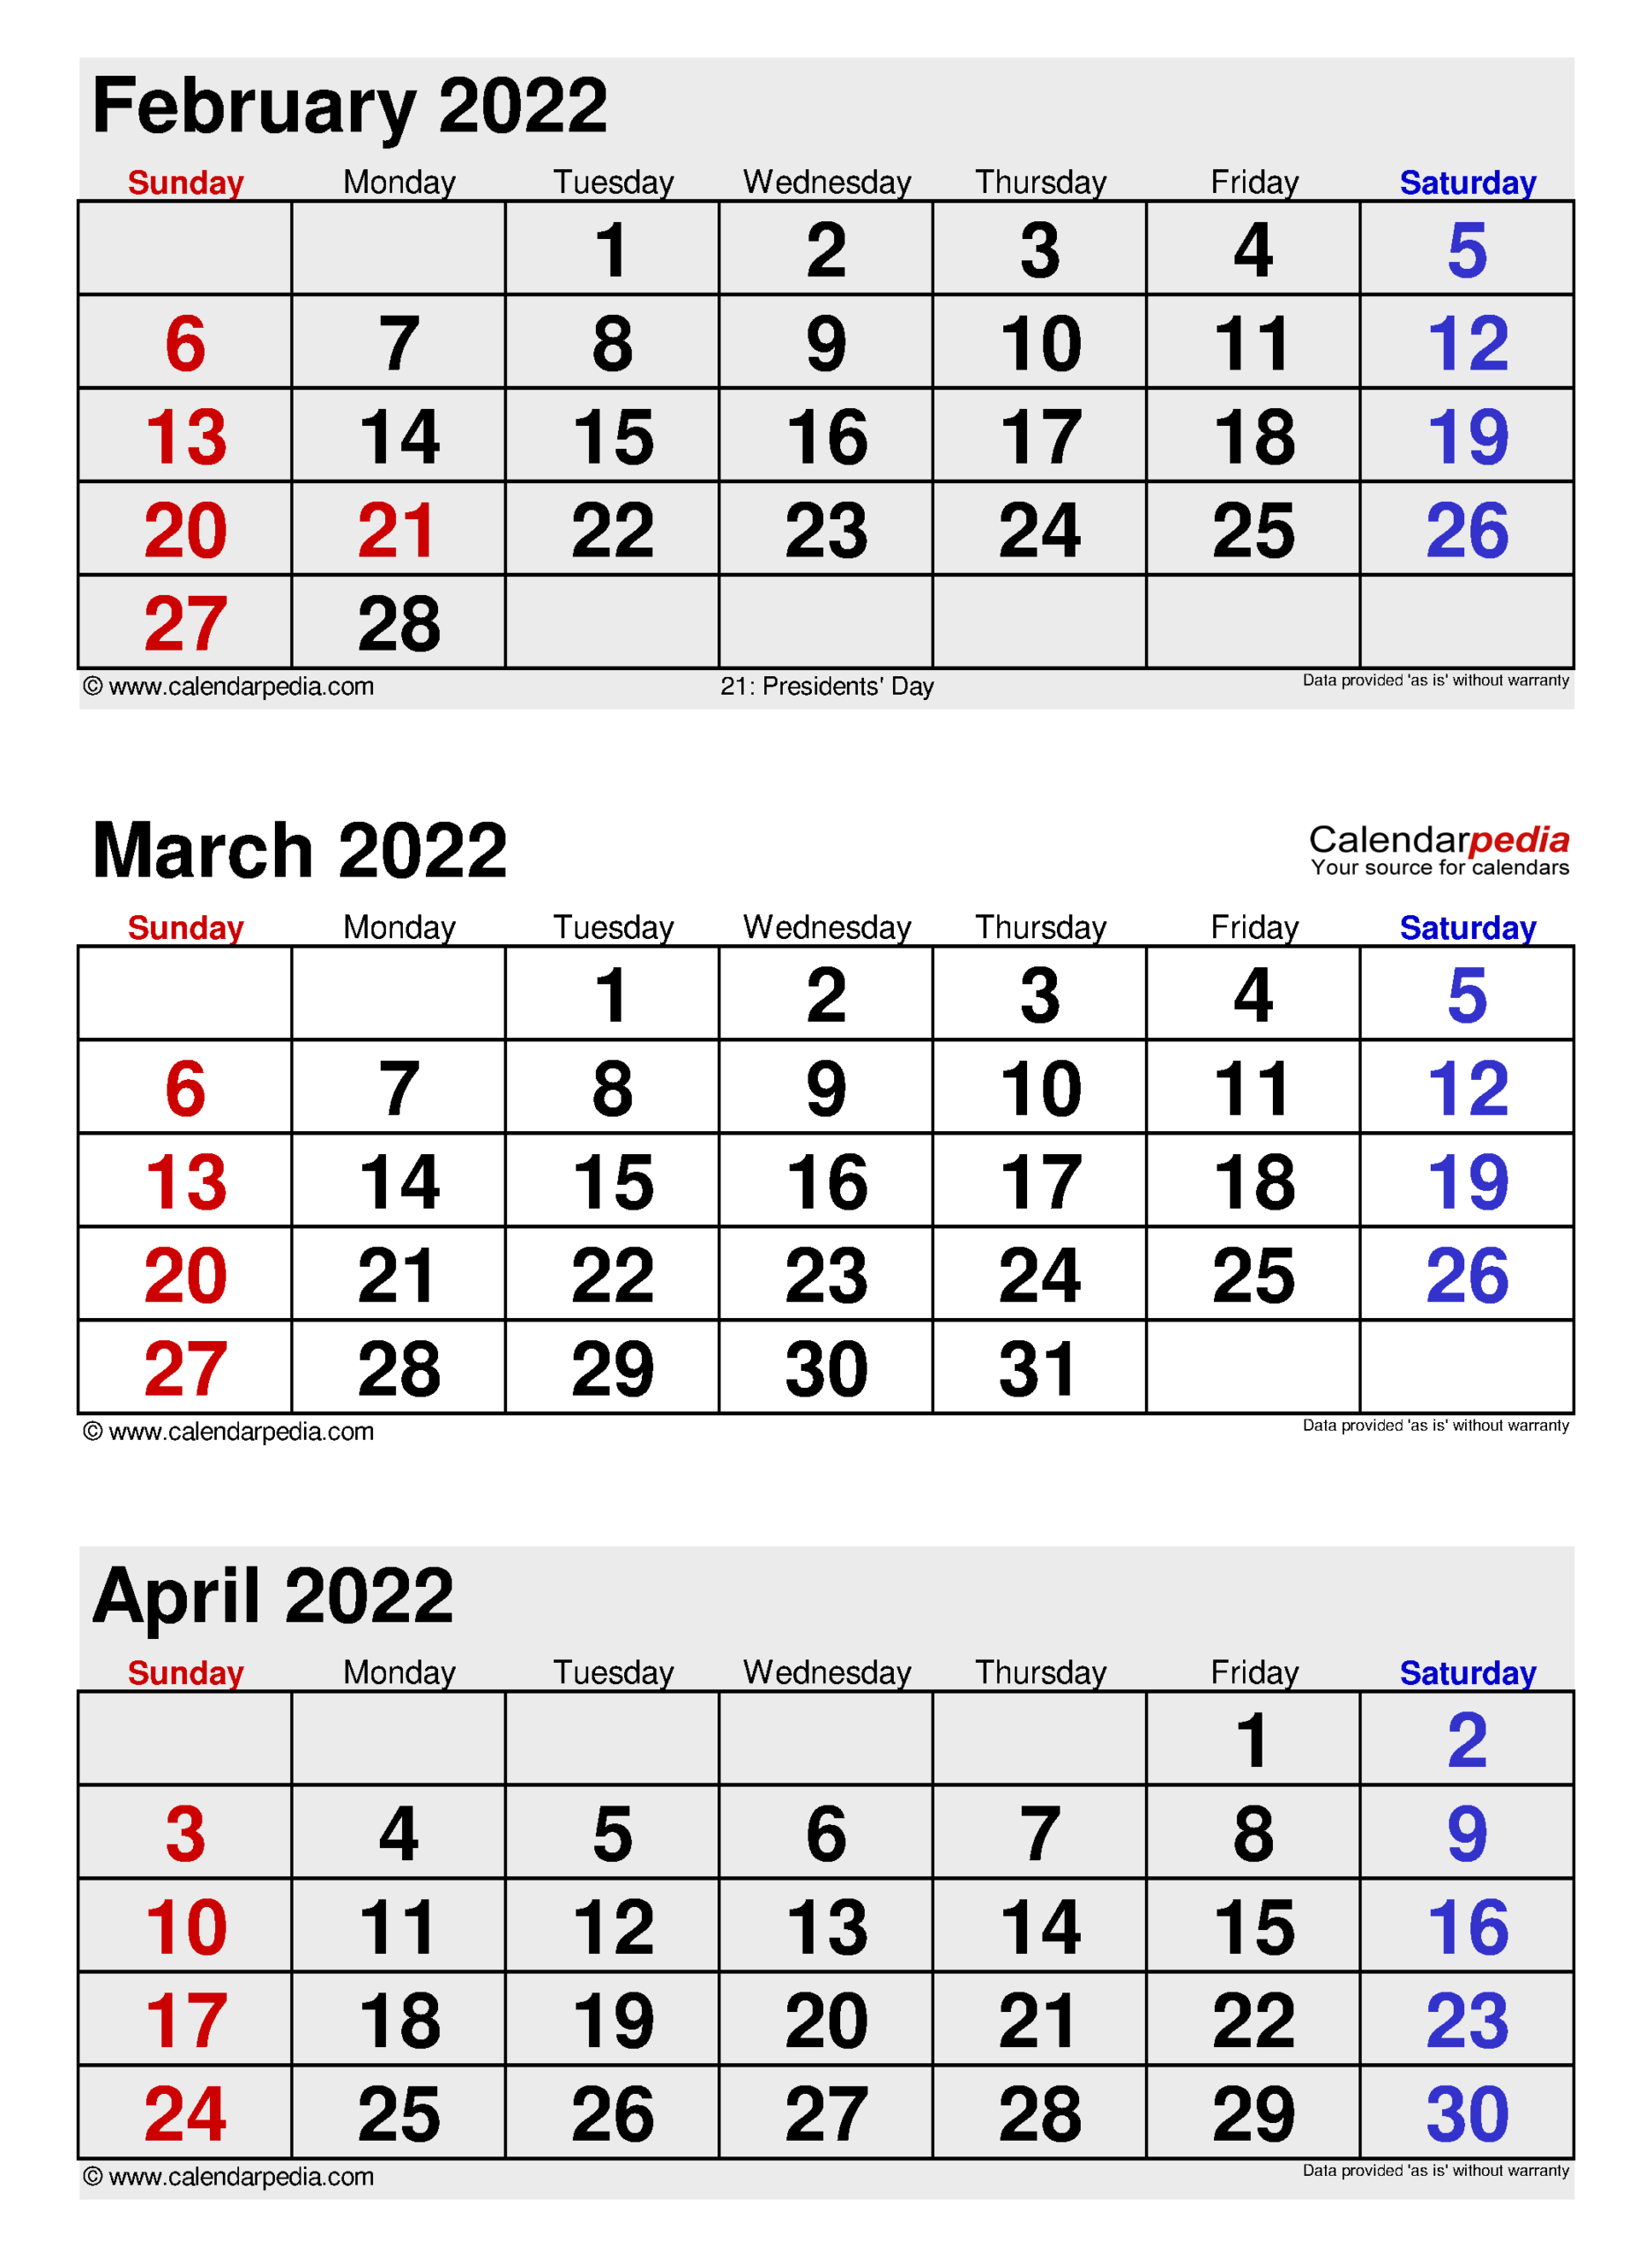 Catch Calendar 2022 March Printable